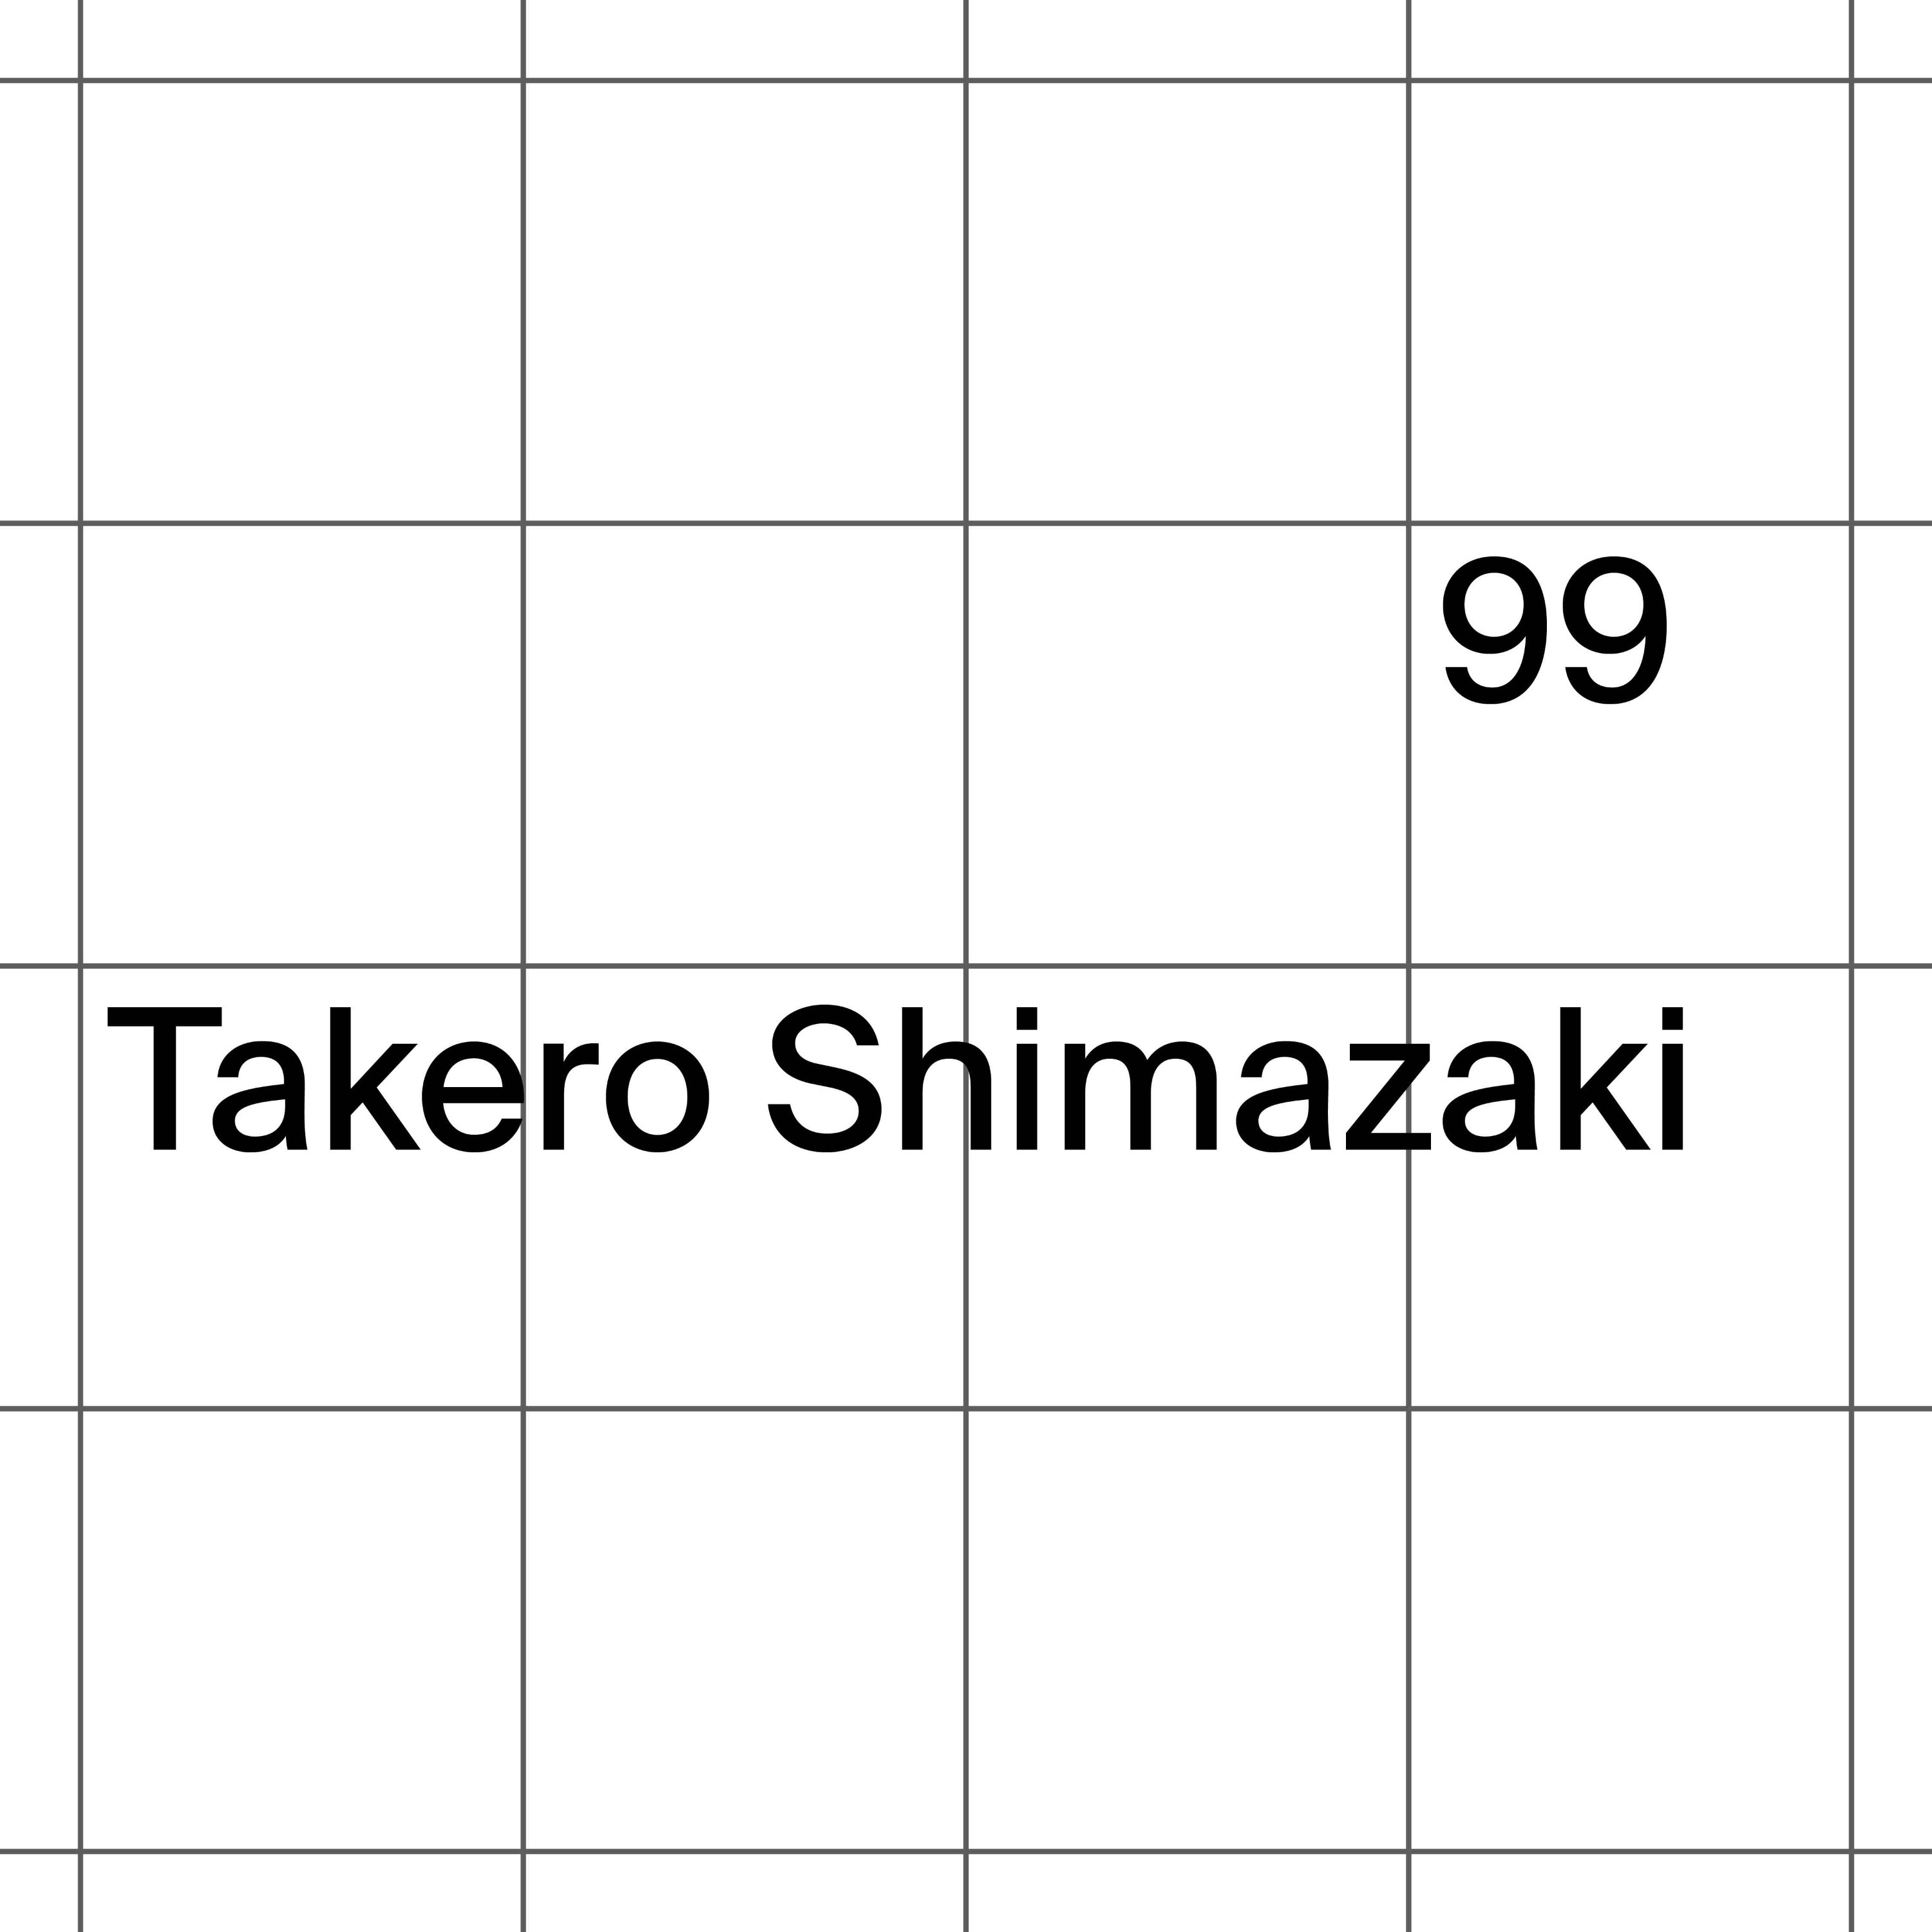 99: Takero Shimazaki